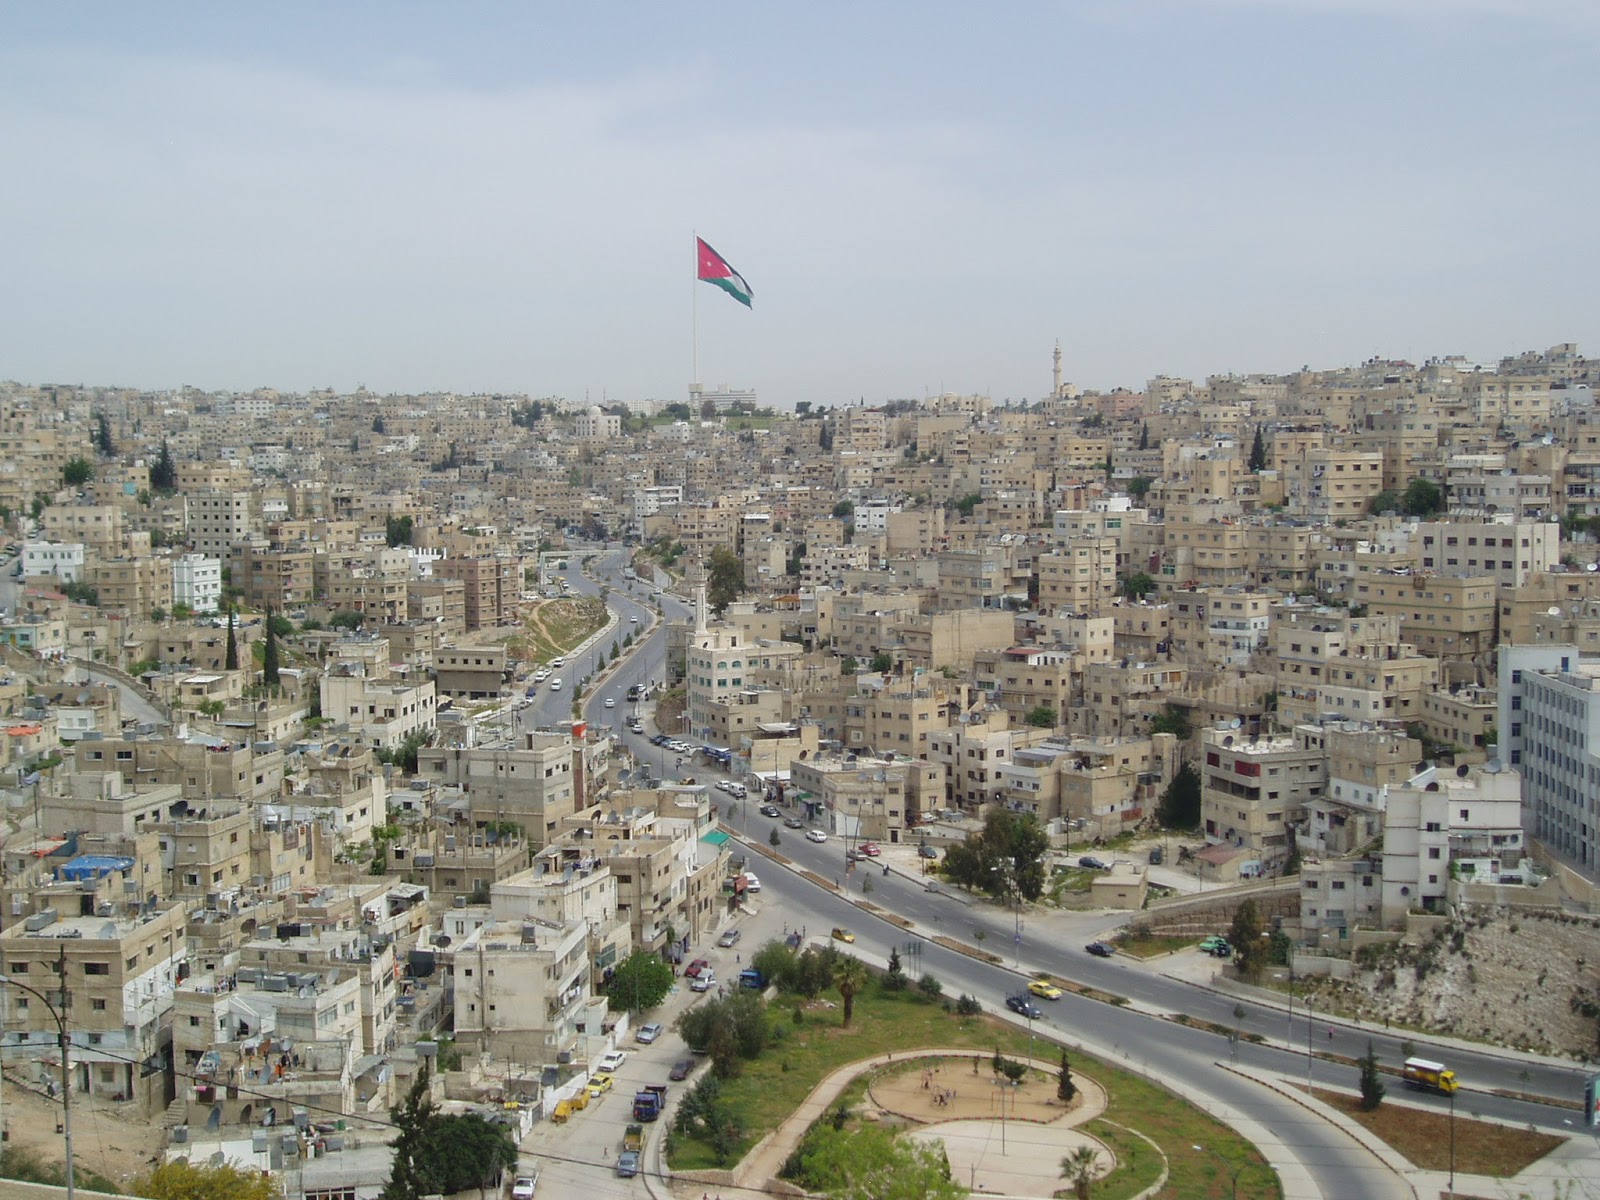 Amman, Jordan Study Middleton: My daily life in Amman